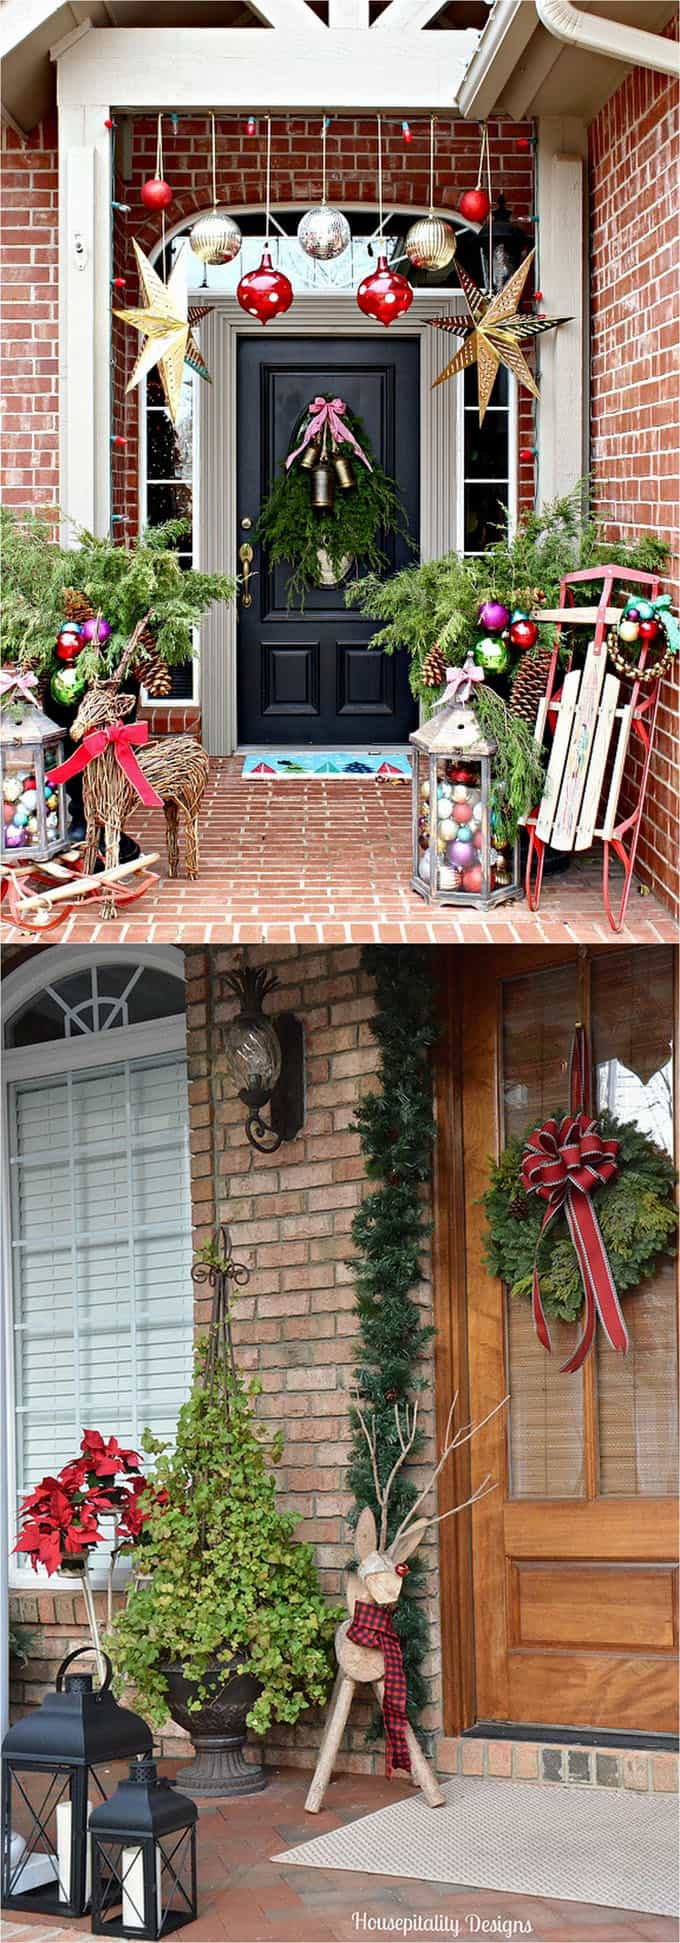 Christmas Yard Decorations Ideas
 Gorgeous Outdoor Christmas Decorations 32 Best Ideas